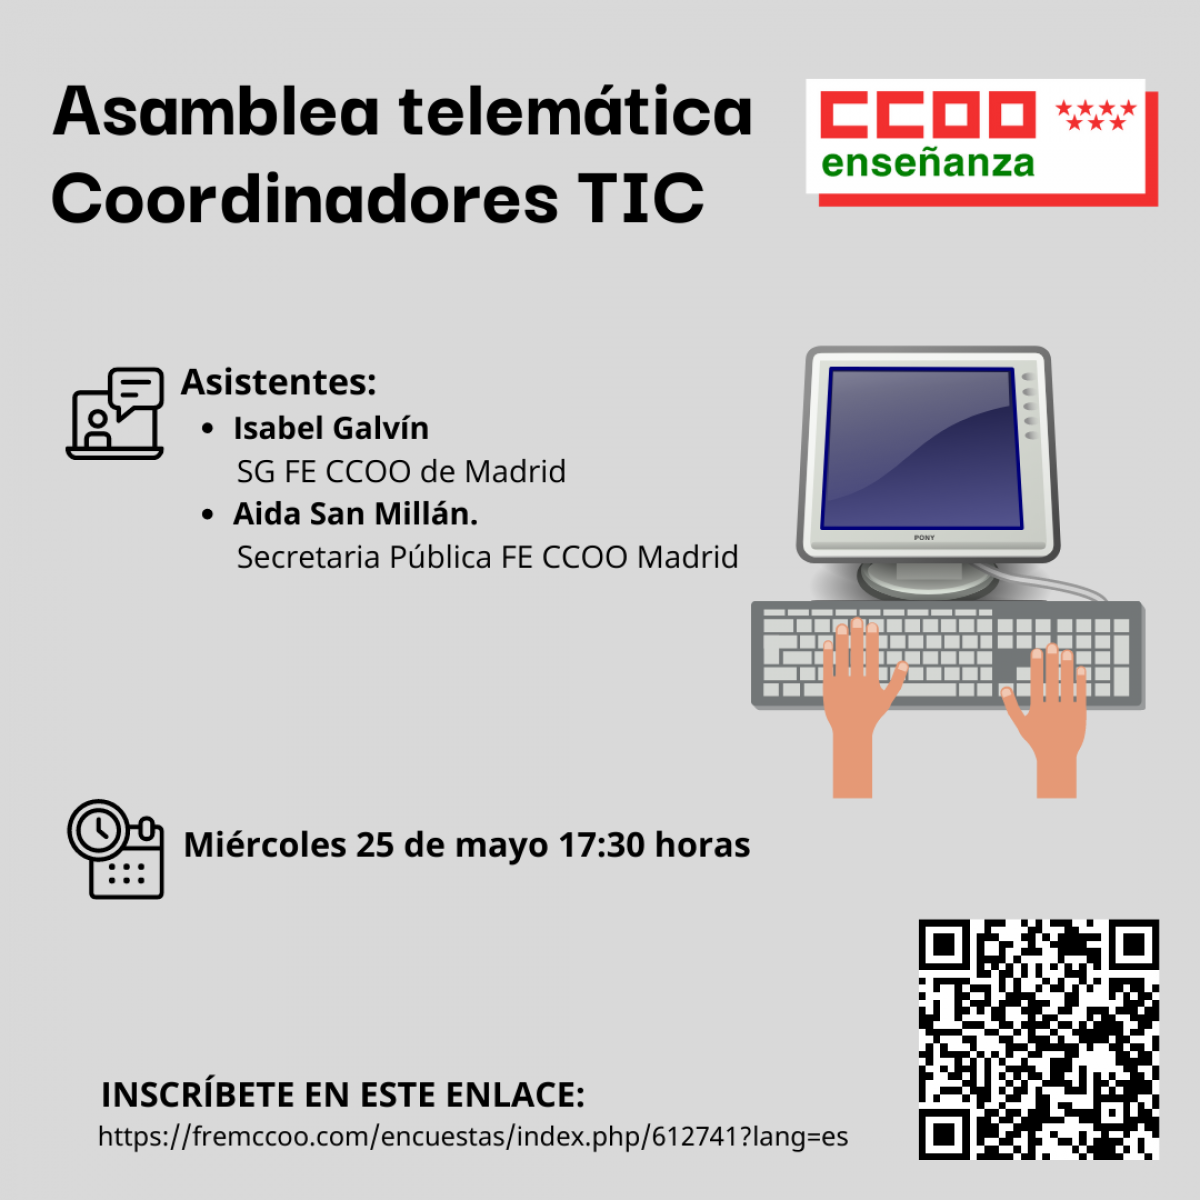 Asamblea telemática CCOO: Coordinadores TIC